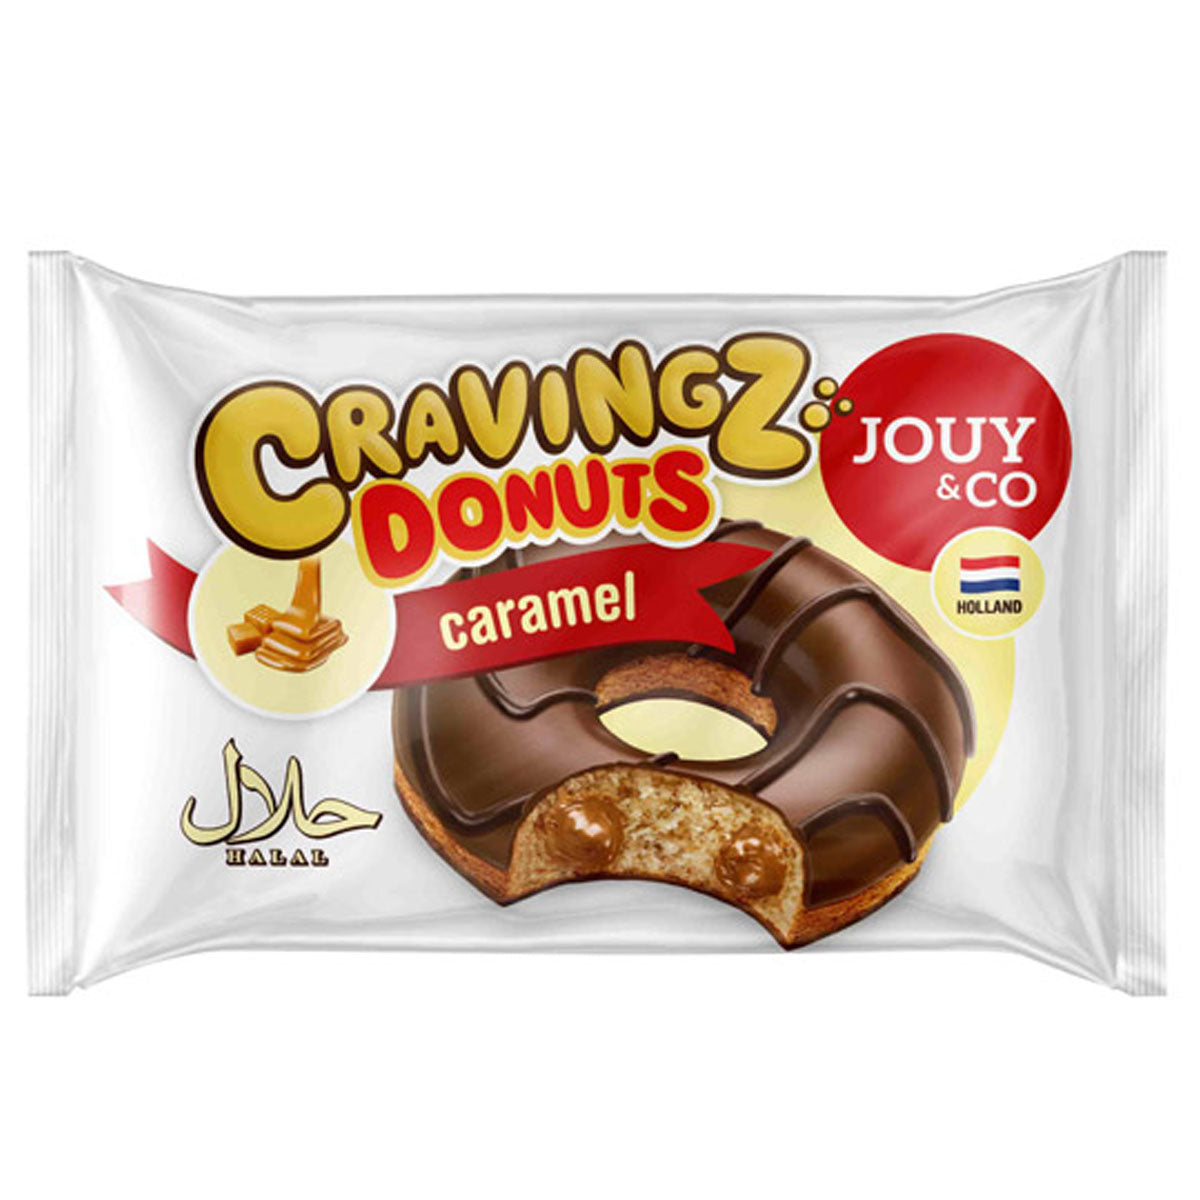 A bag of Cravingz - Donuts Caramel - 50g.